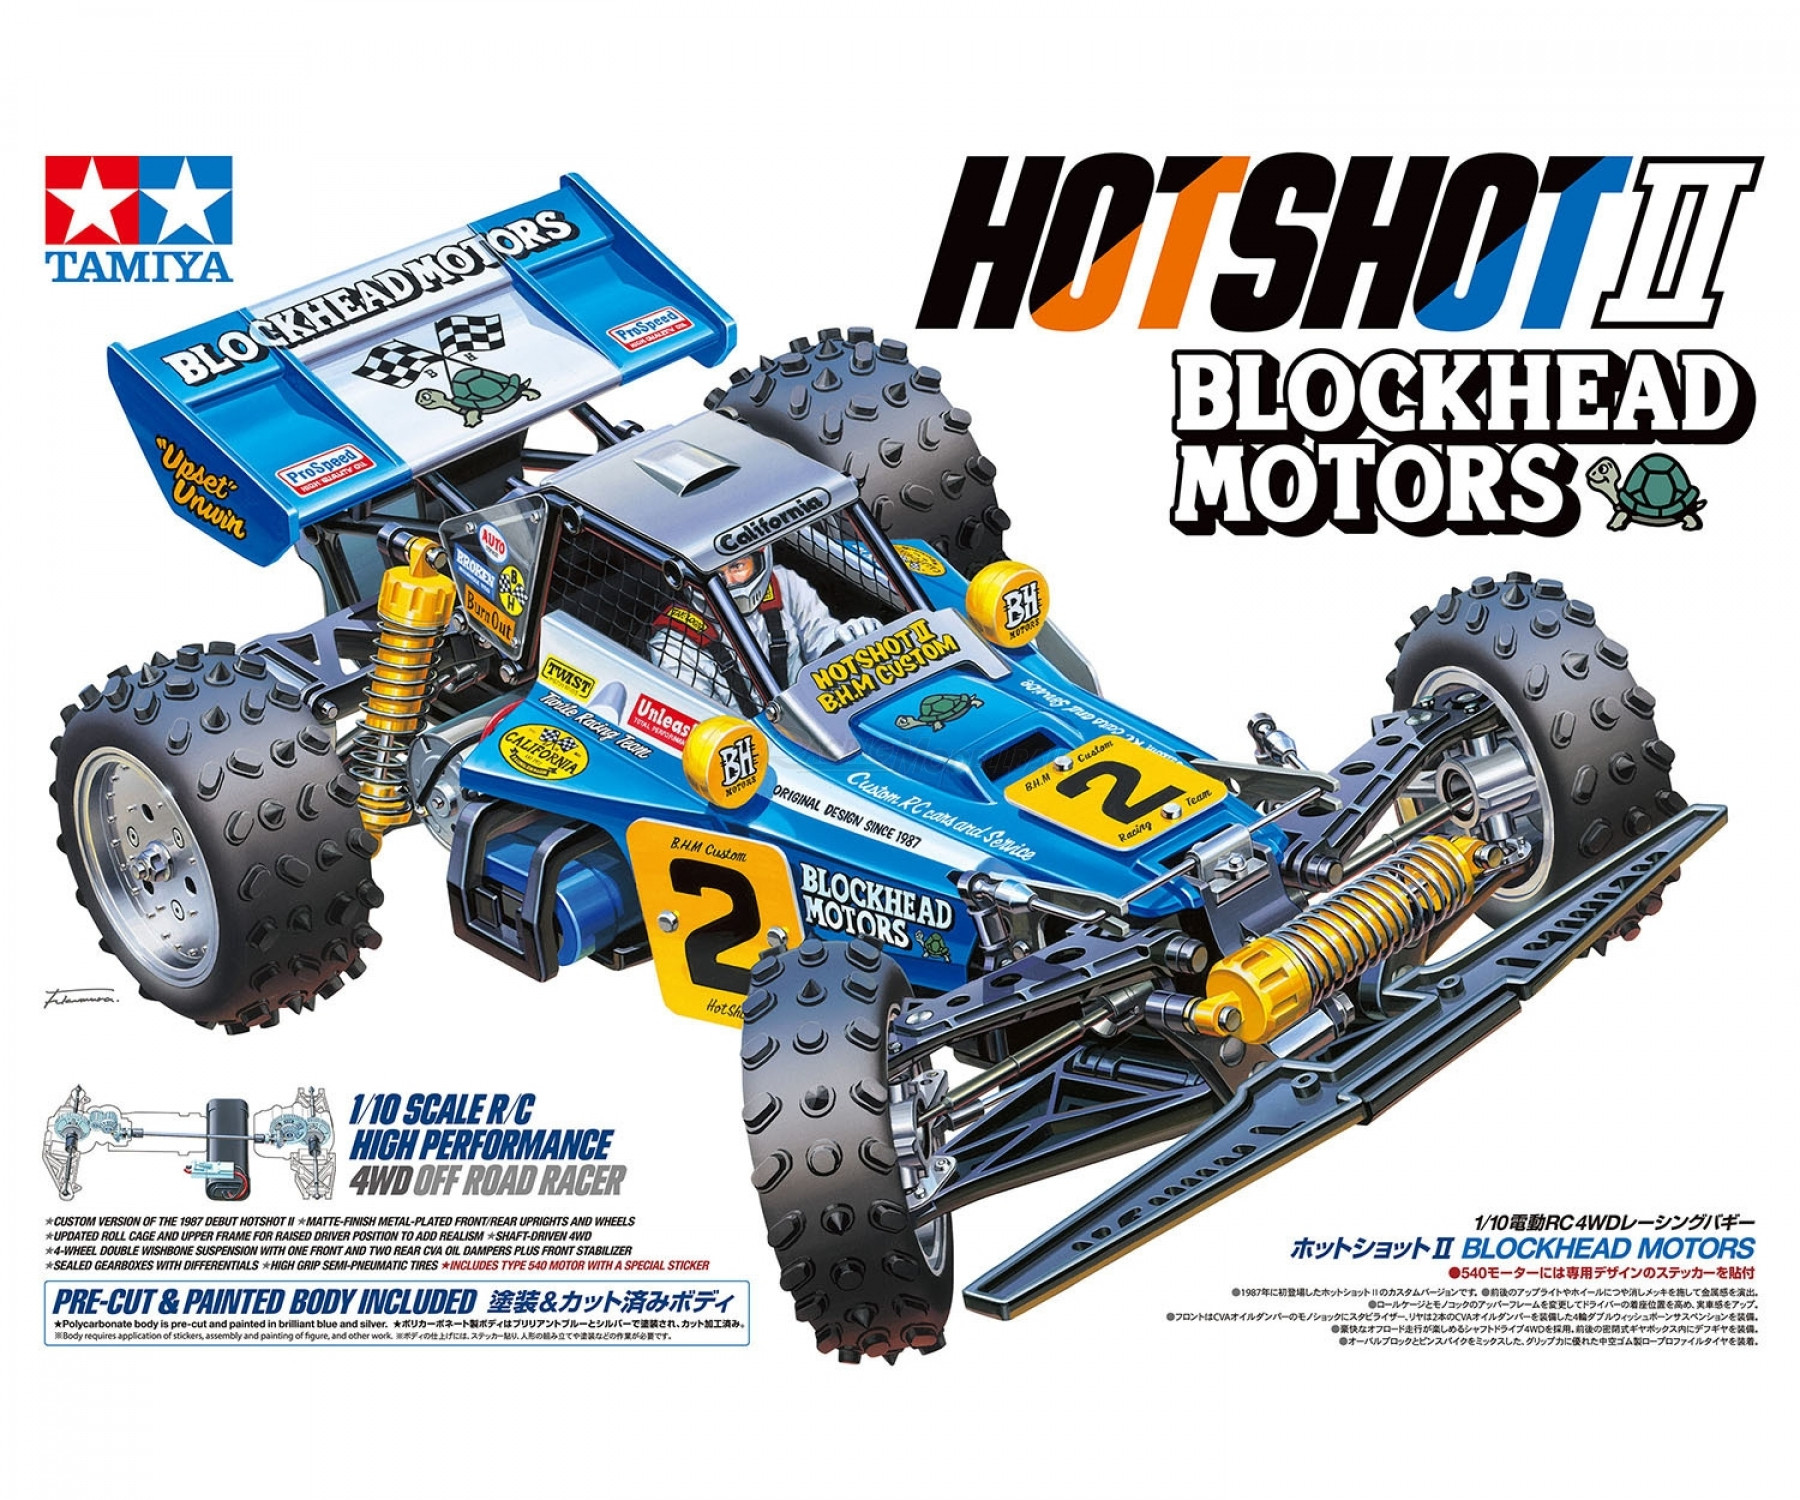 1/10 RC Hotshot II Blockhead Motors